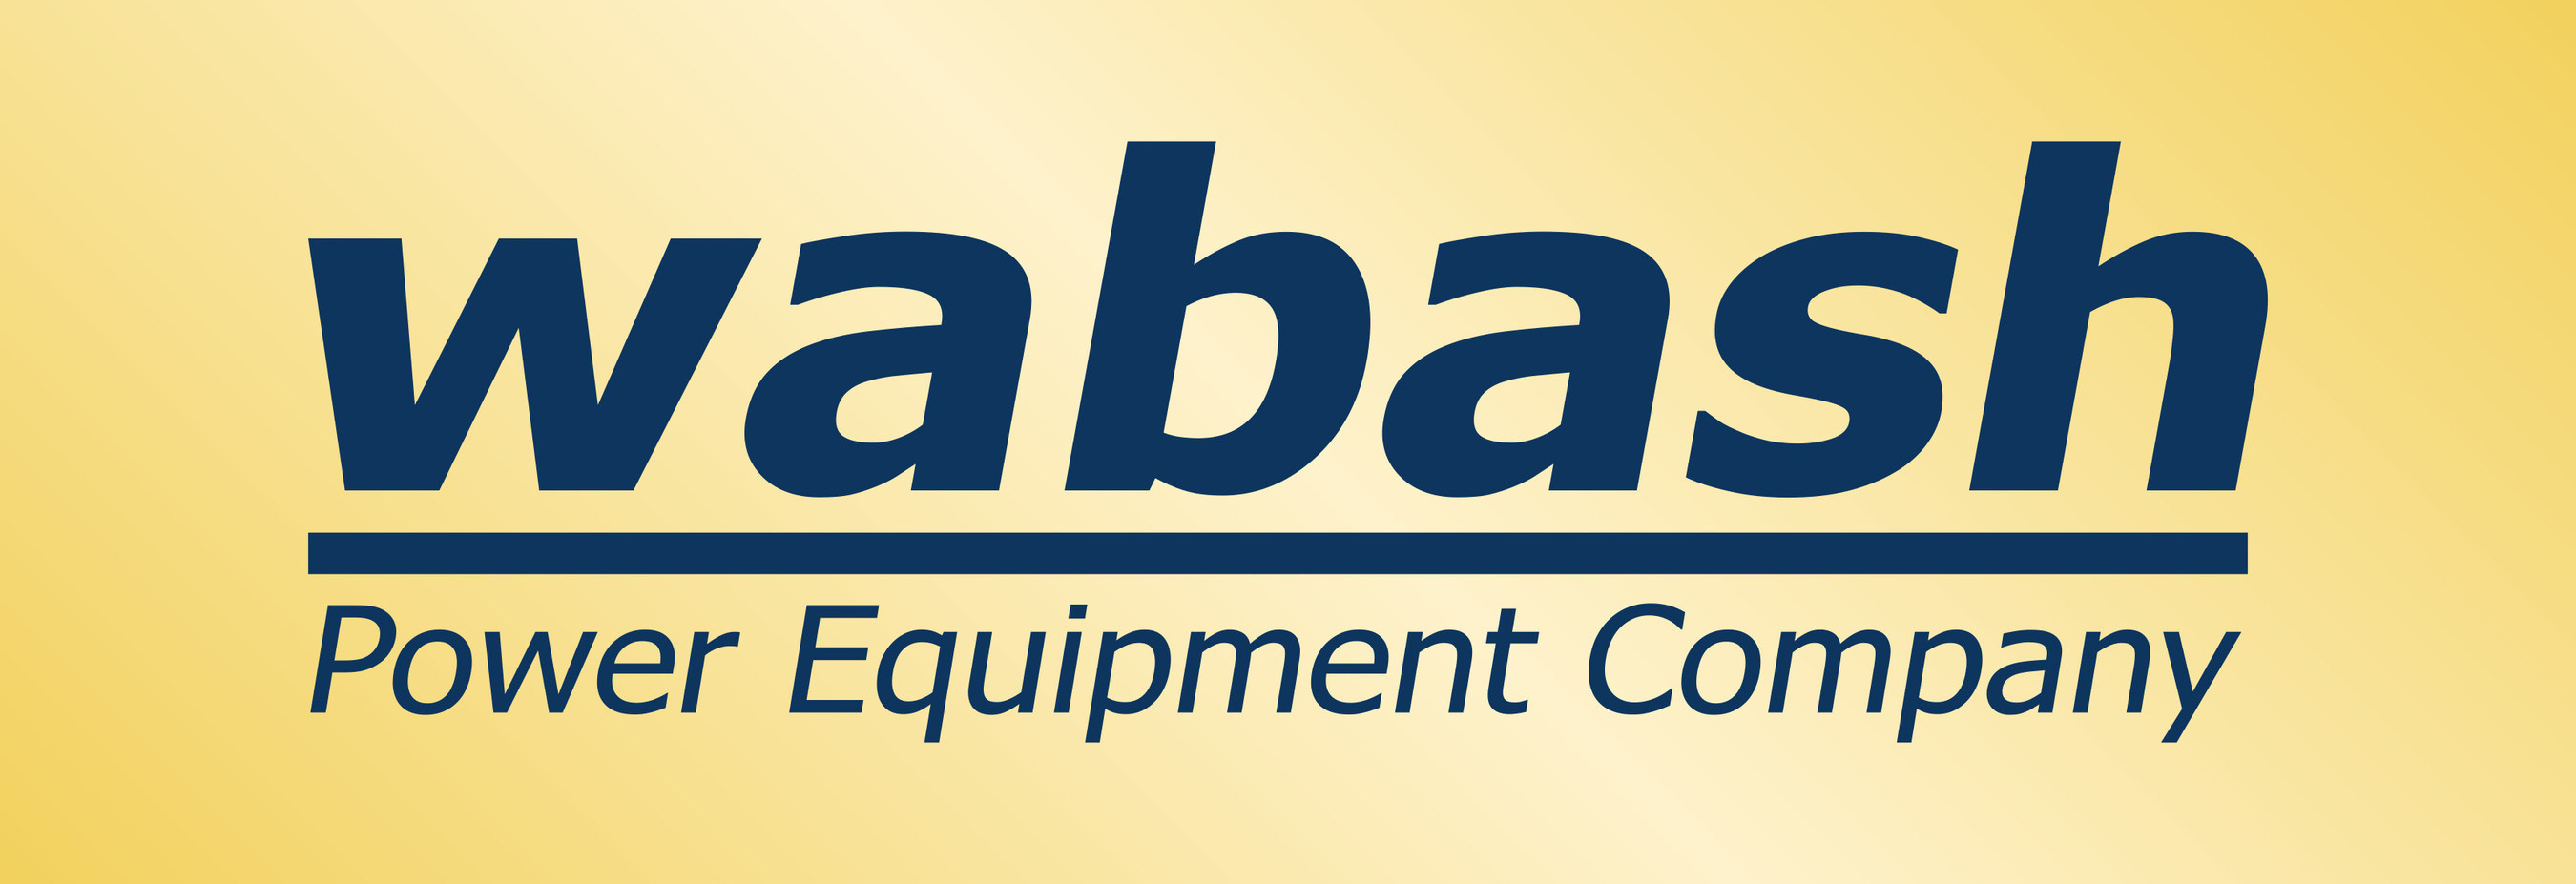 Wabash Power is a leading supplier of rental boilers worldwide.